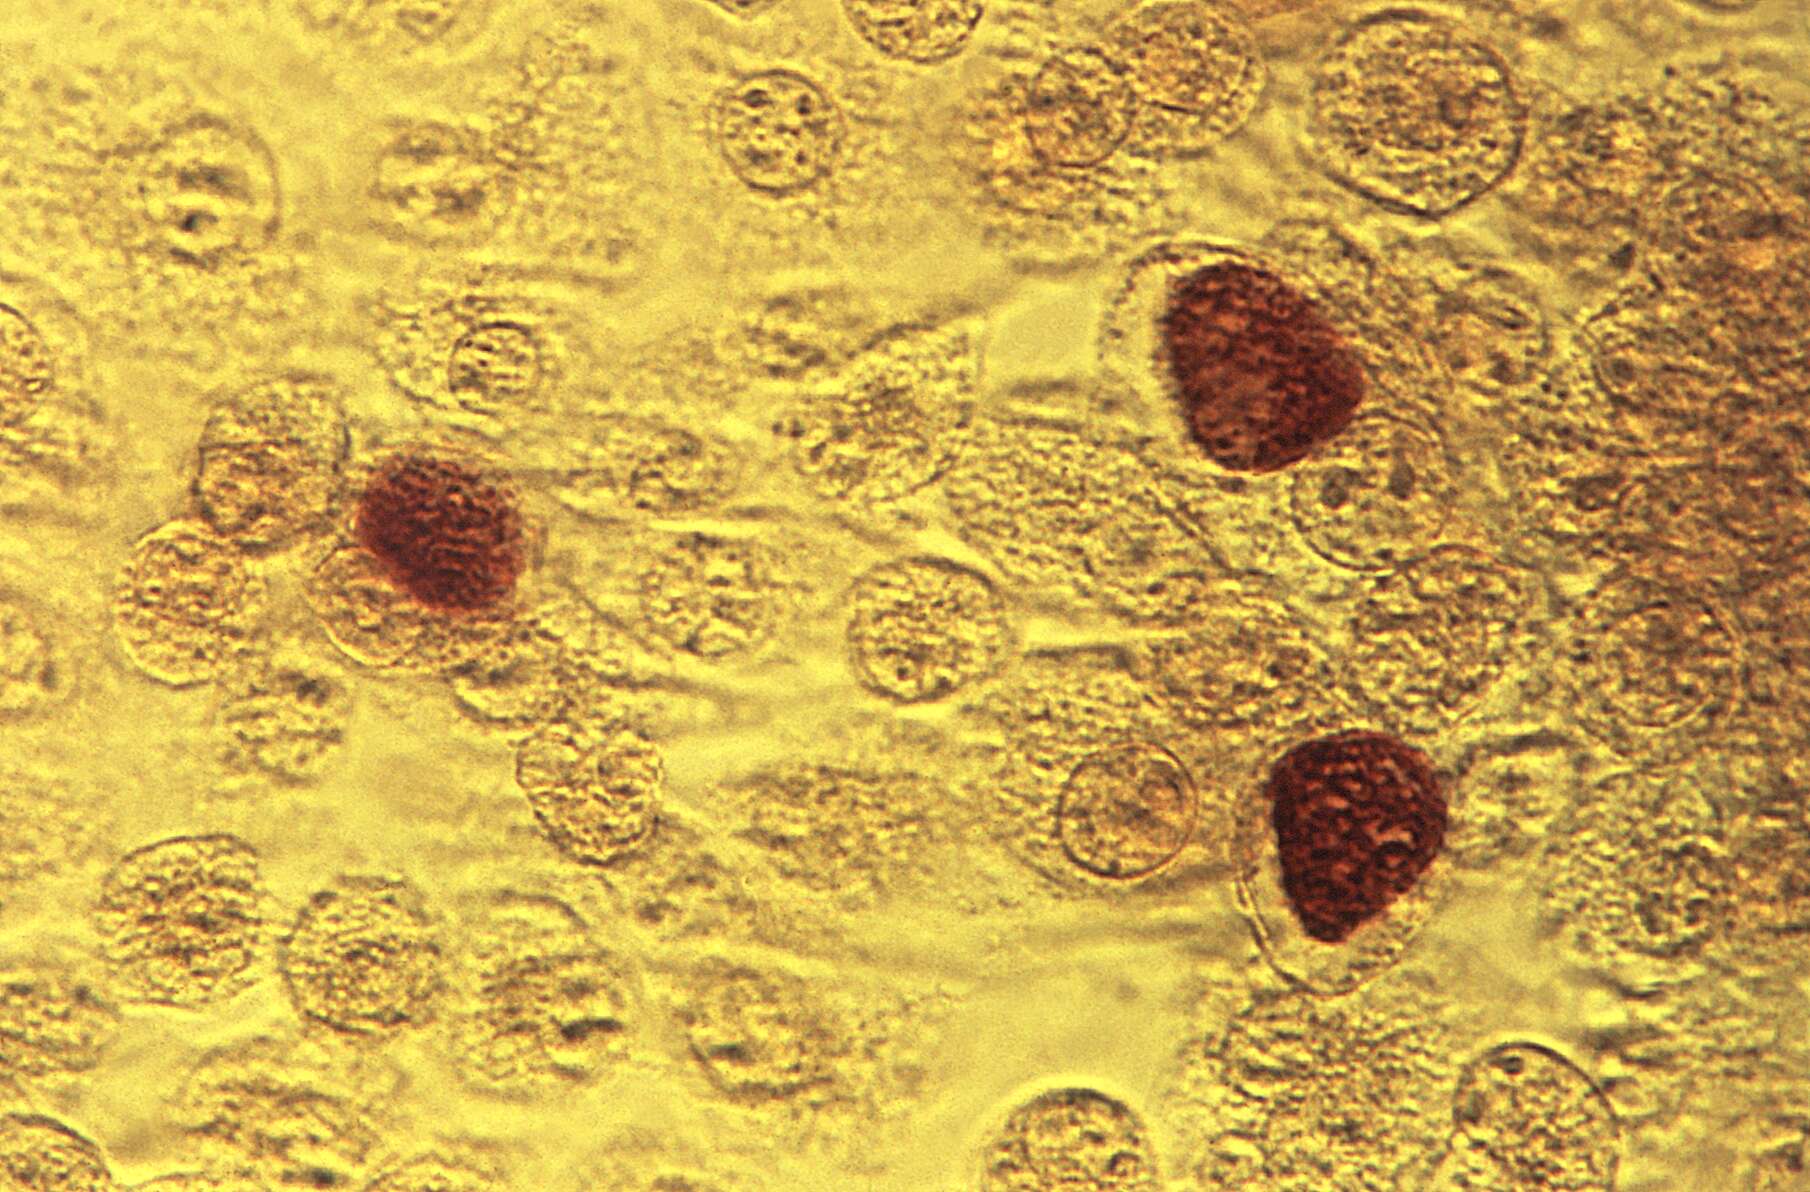 Image of Chlamydia trachomatis